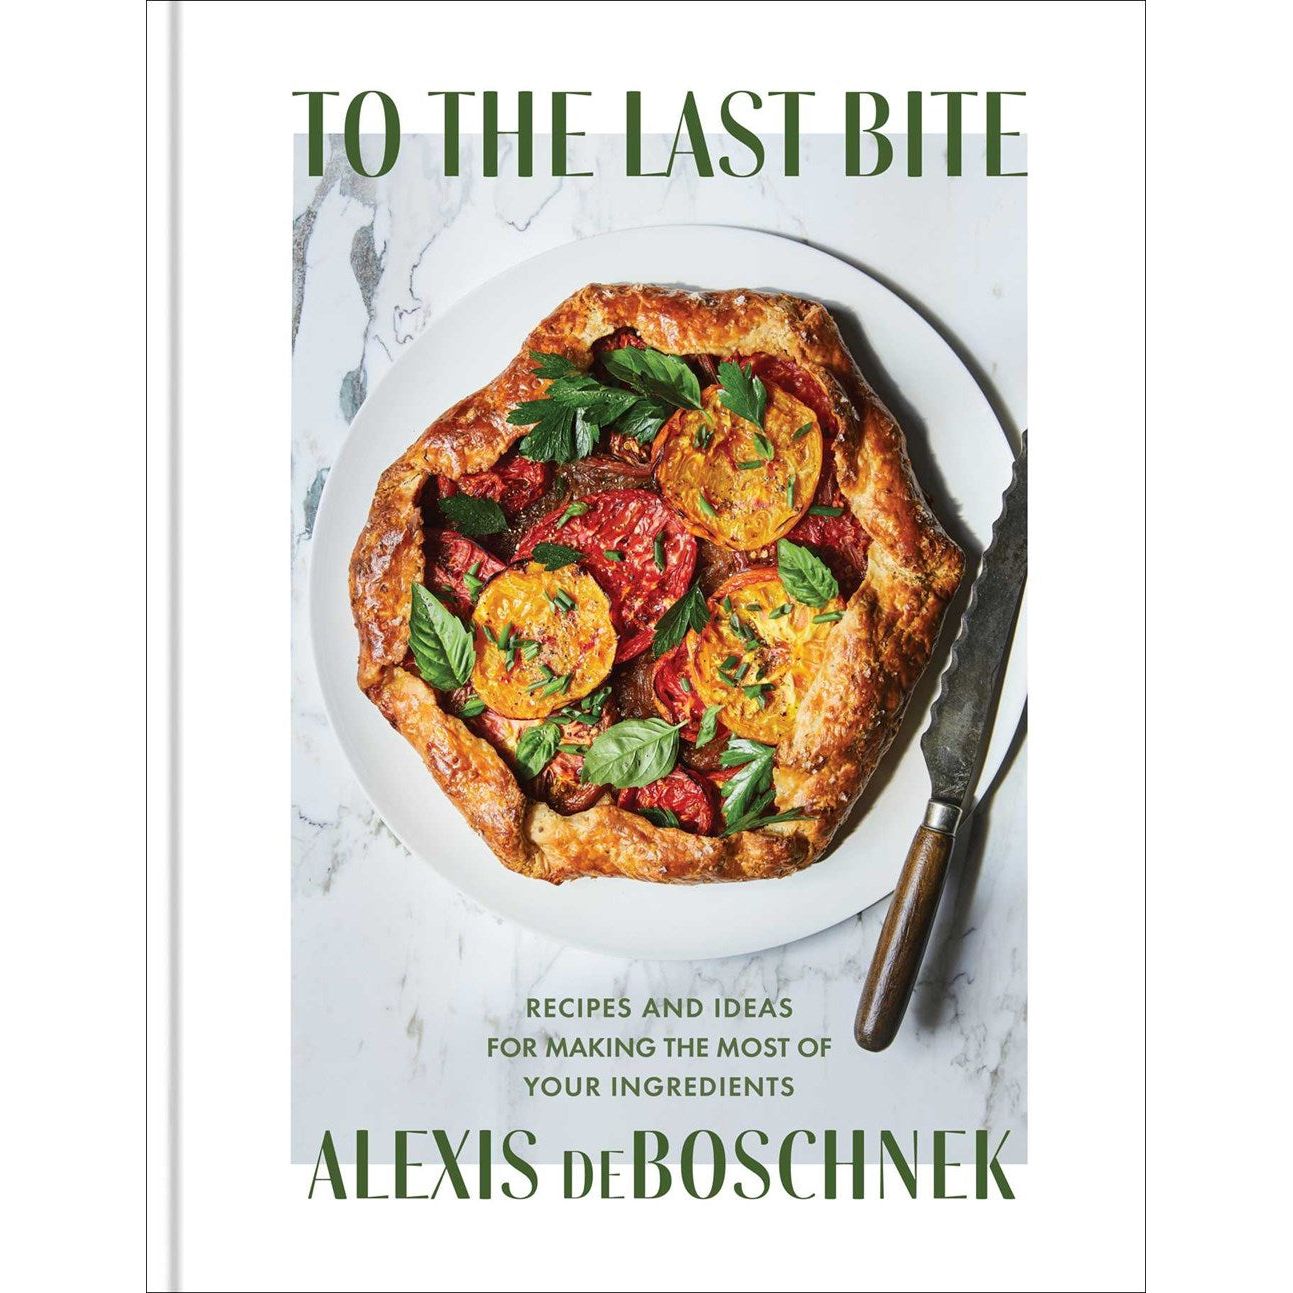 To The Last Bite (Alexis deBoschnek)